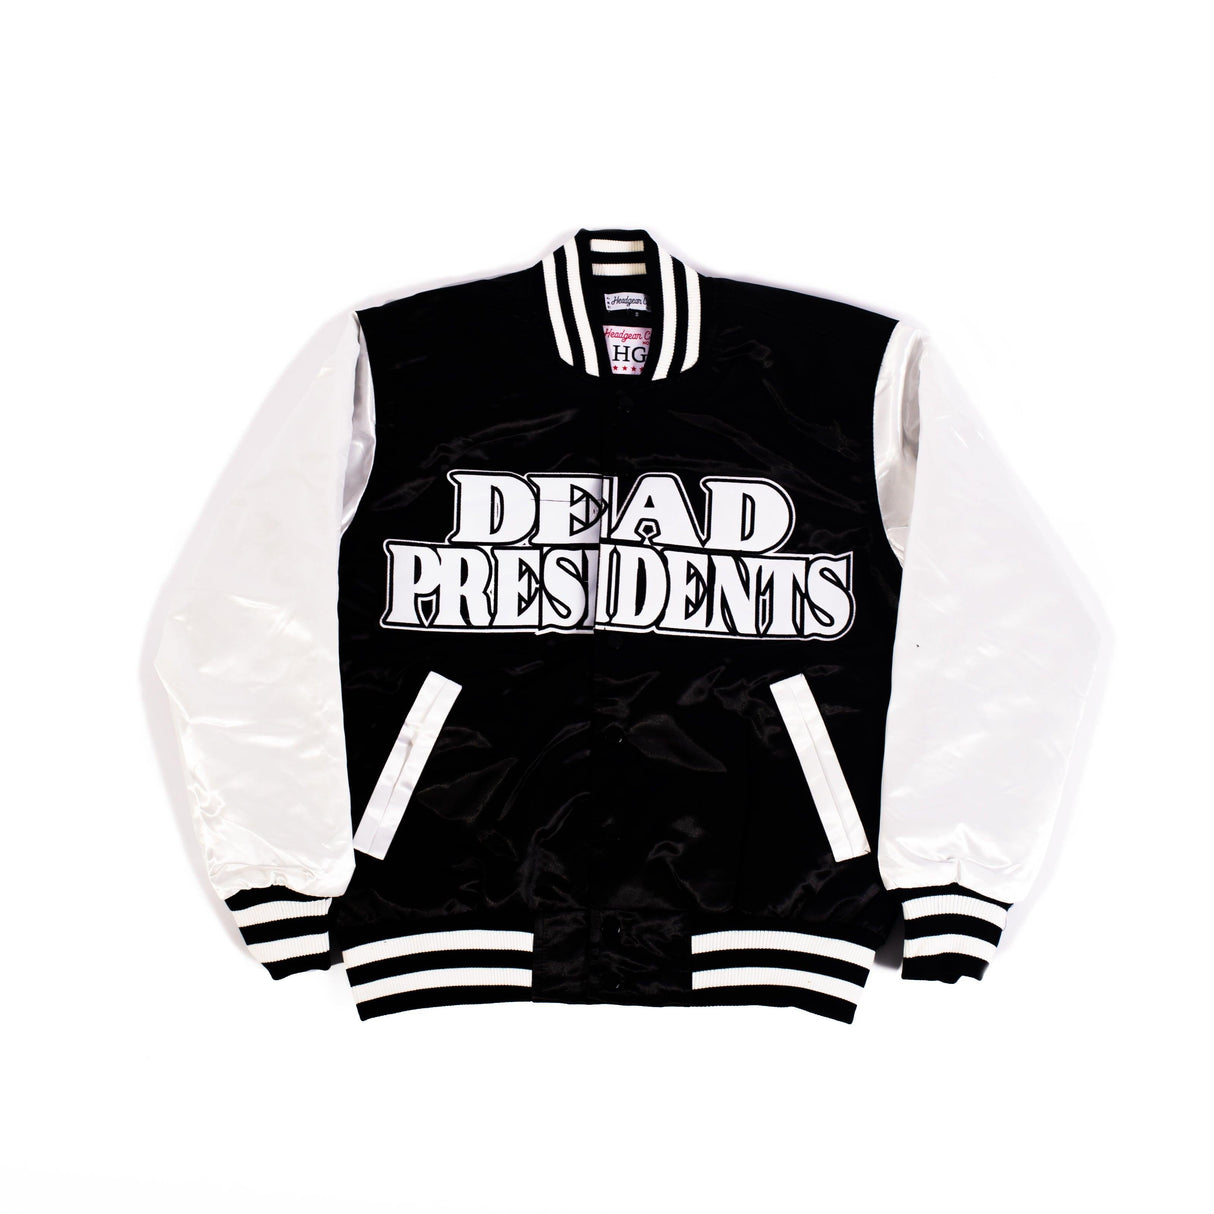 Dead Presidents Youth Satin Jacket Black/White - Allstarelite.com